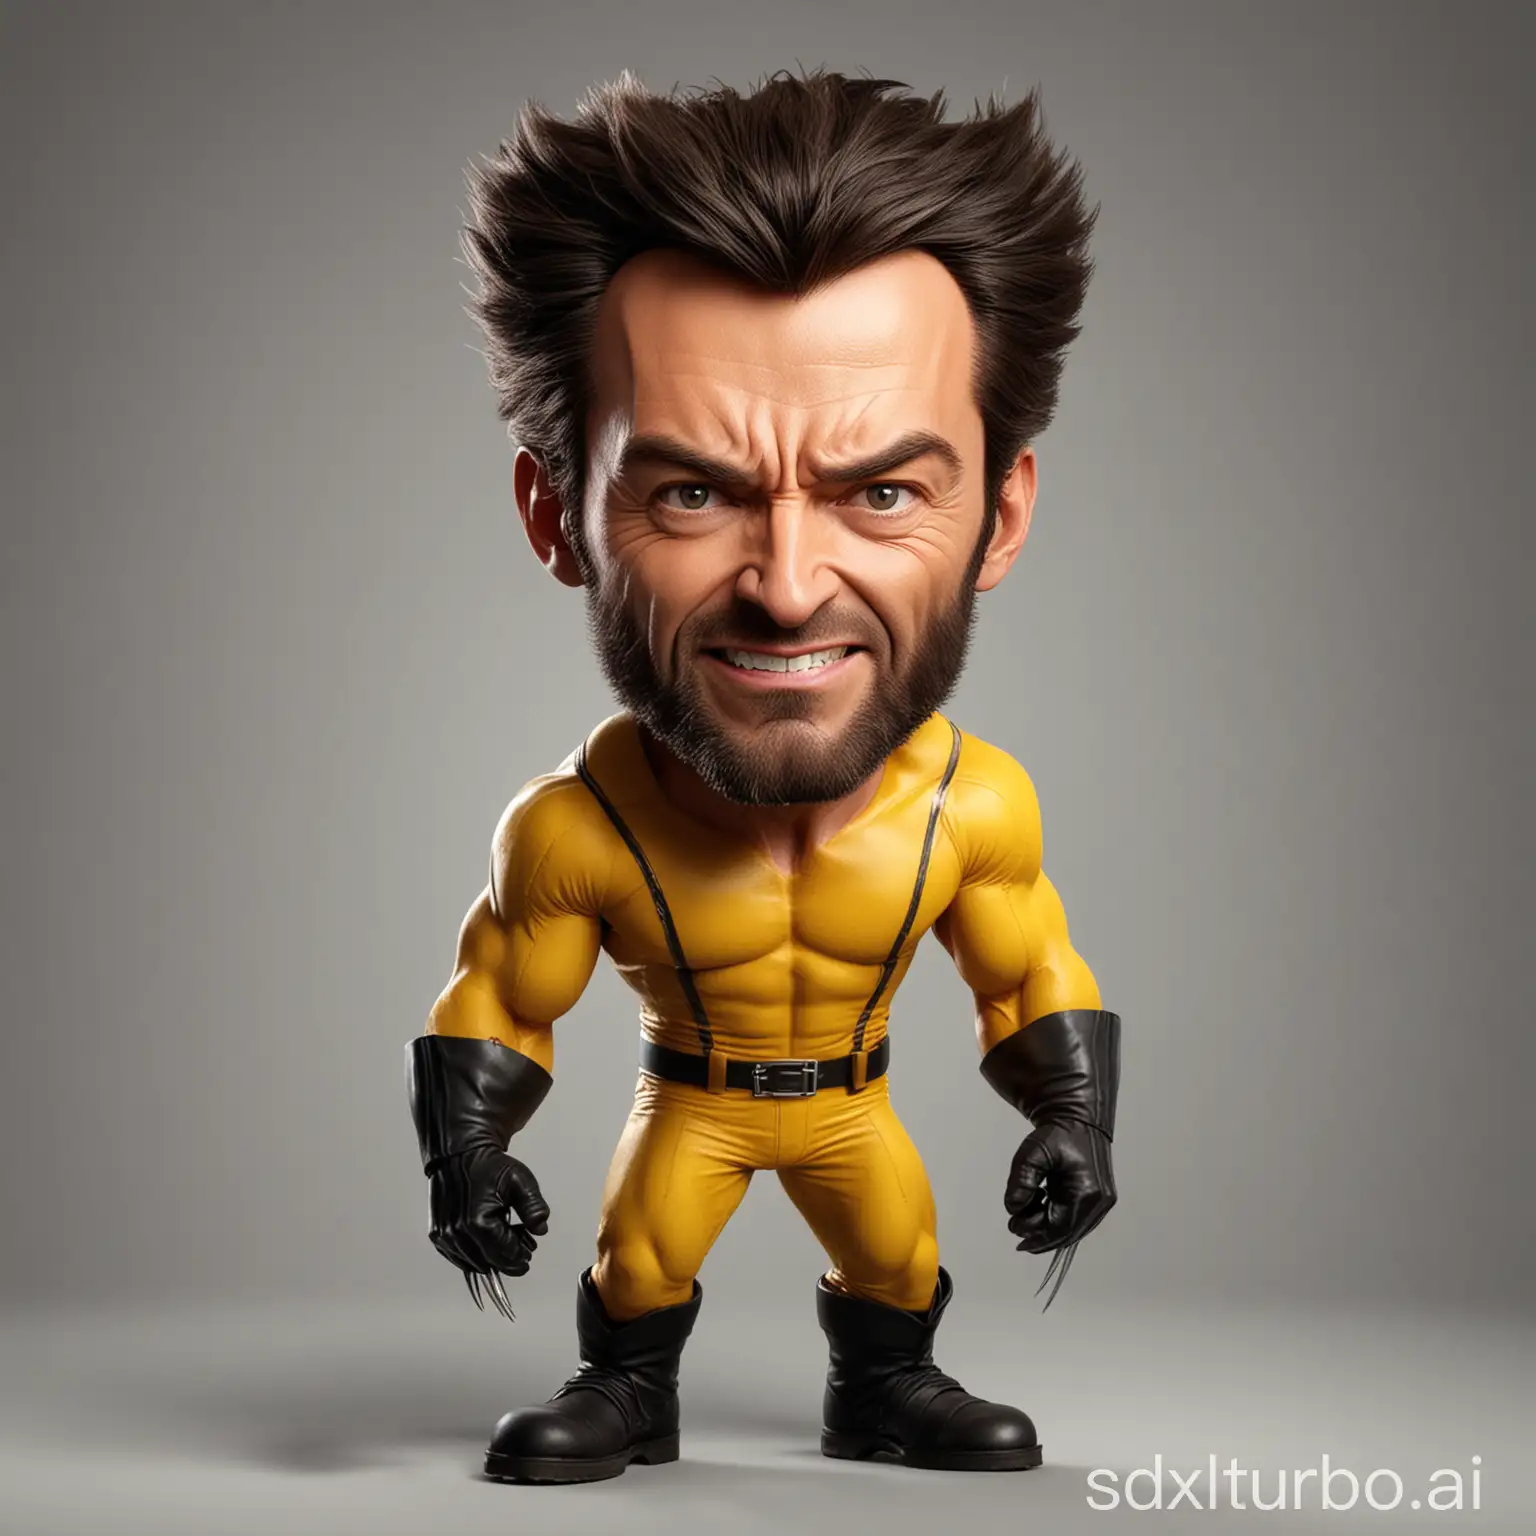 Hugh-Jackman-as-Wolverine-Caricature-in-Classic-Yellow-Costume-XMen-Movie-Scene